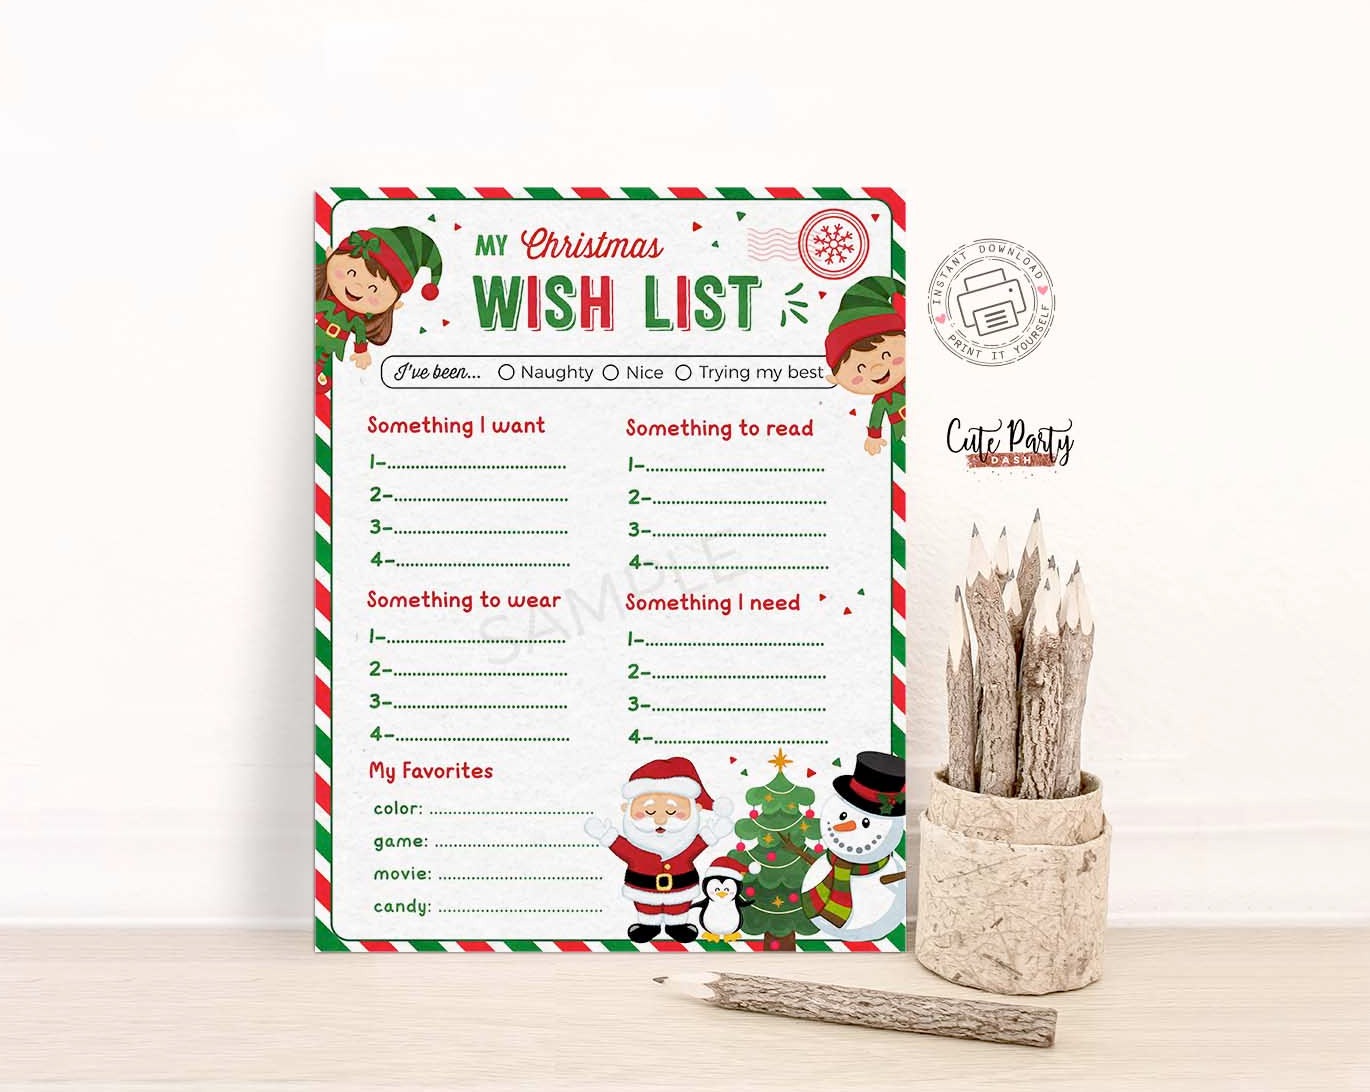 Christmas Wish List for kids, Printable Holidays Wish List template - – Cute Party Dash